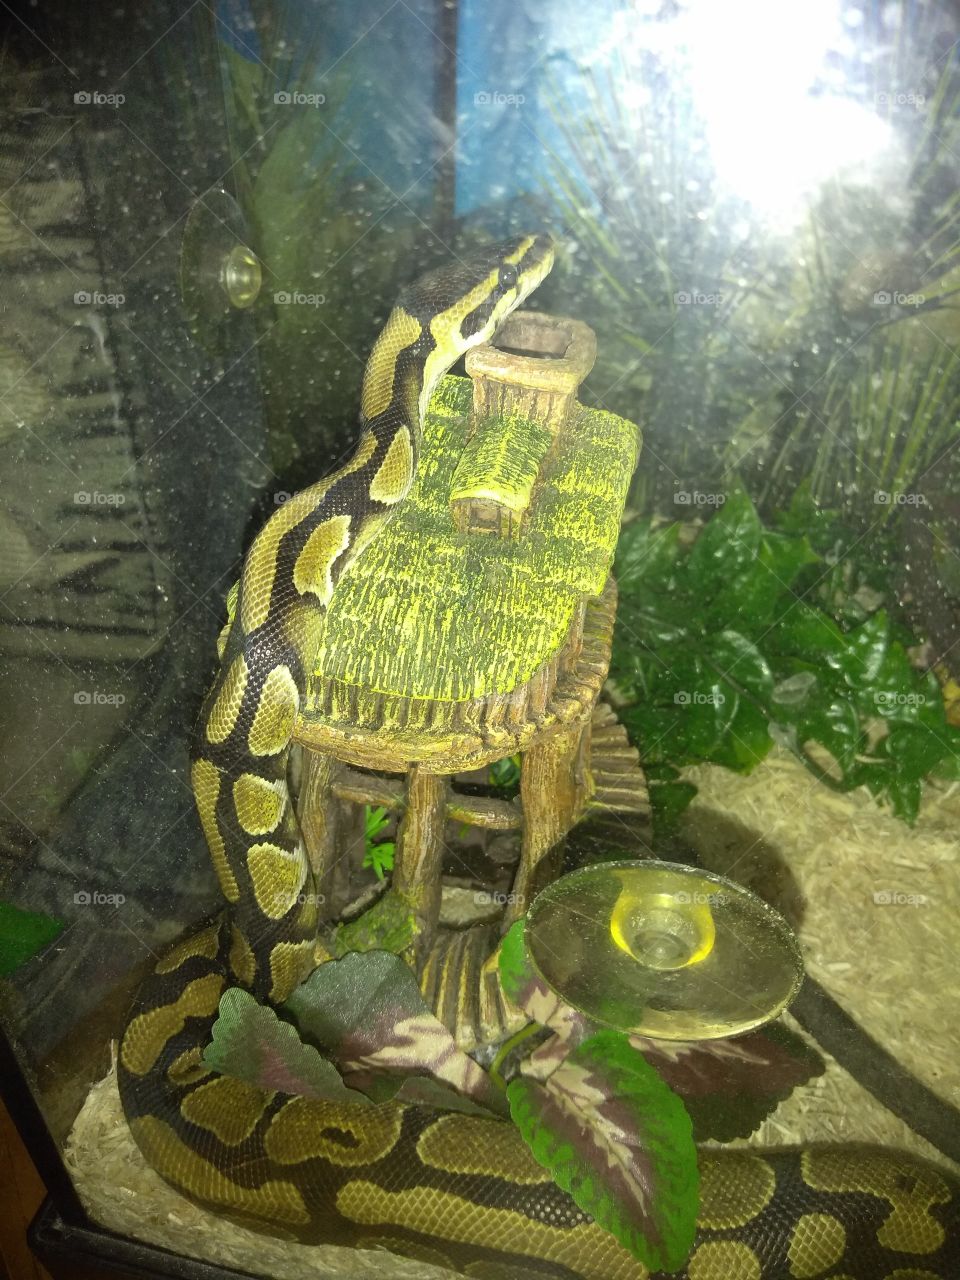 ball python thinking about life lol